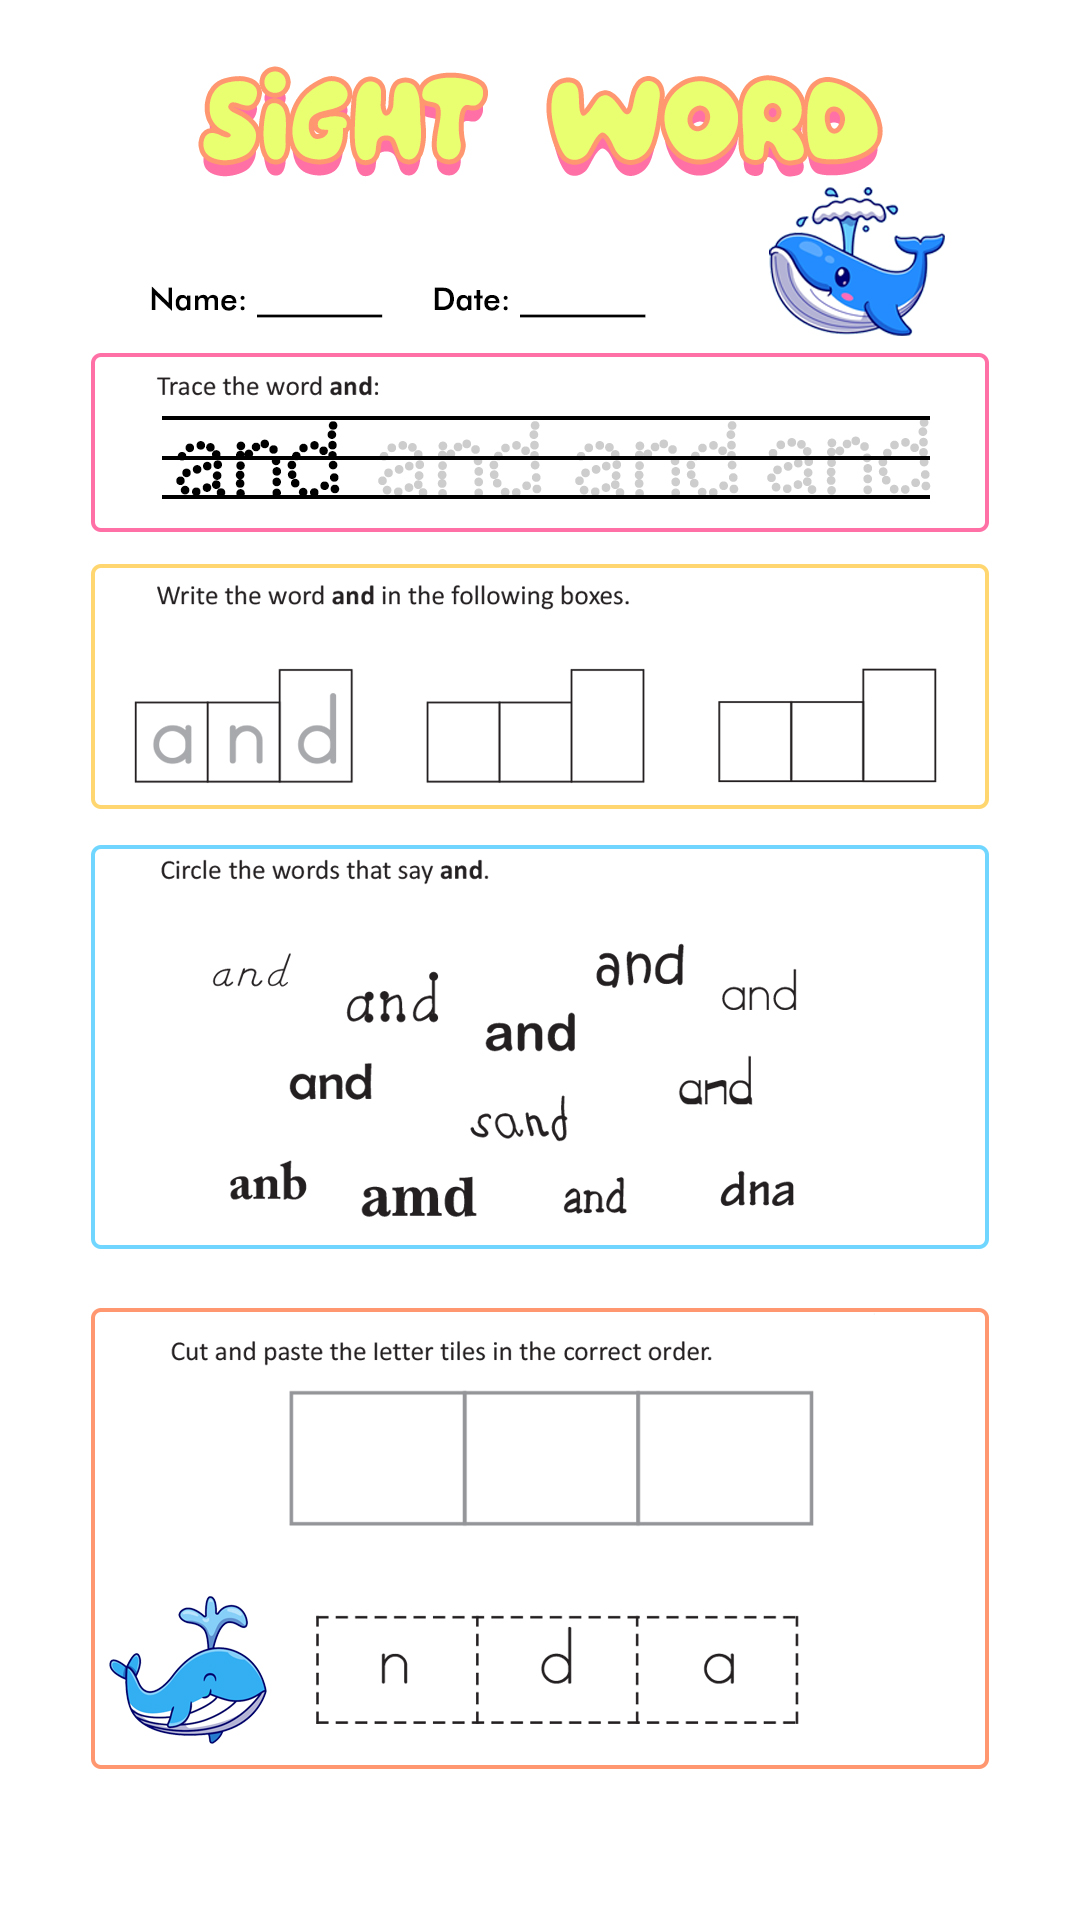 Free Printable Sight Word Worksheets Image